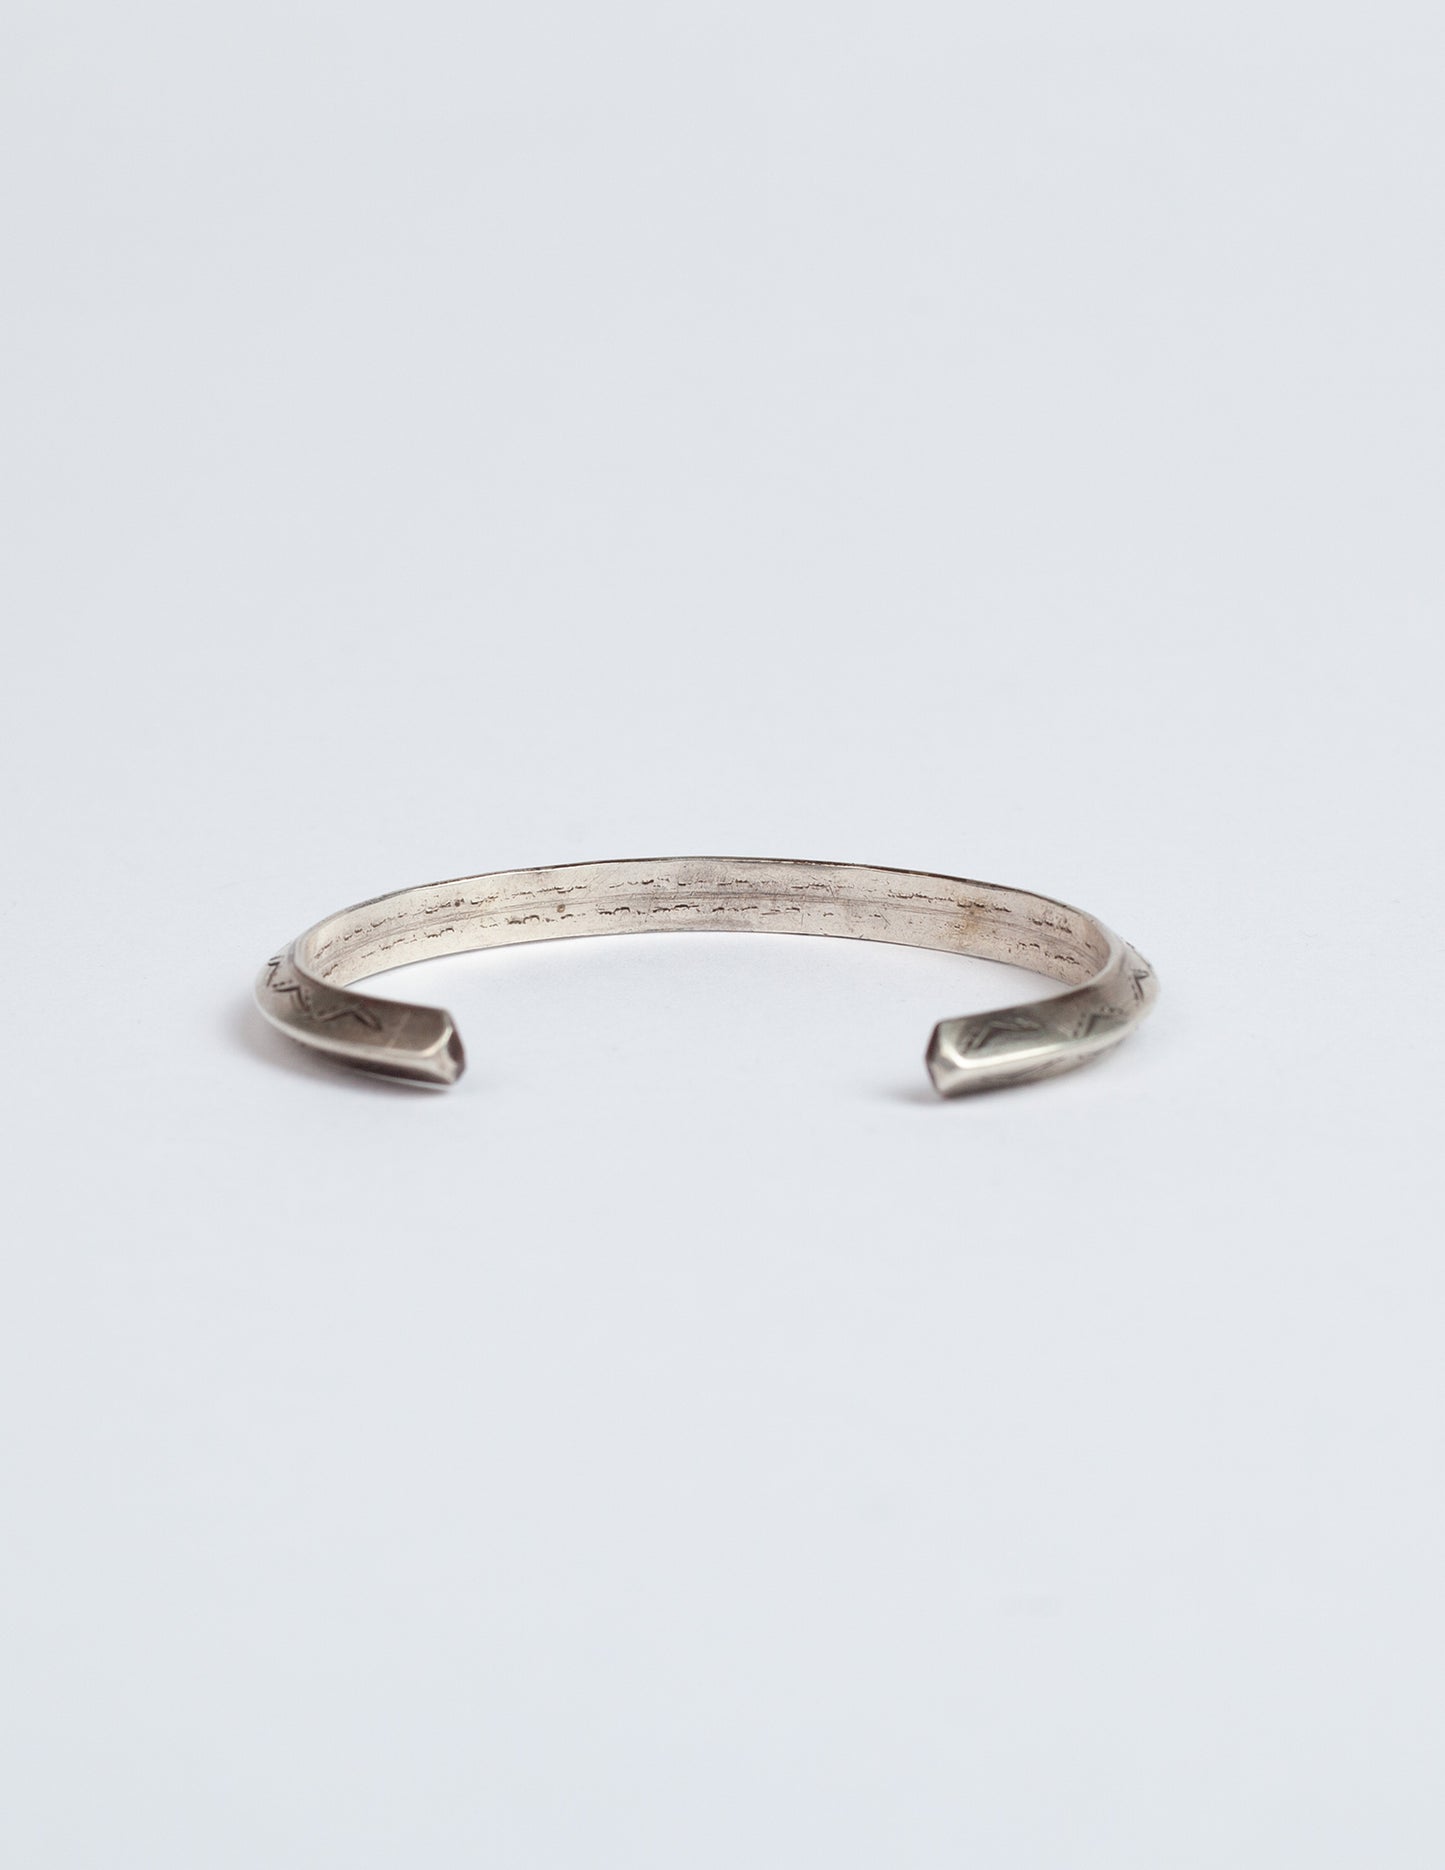 Vintage Carinated Navajo Sterling Silver Cuff Bracelet with Peak Design